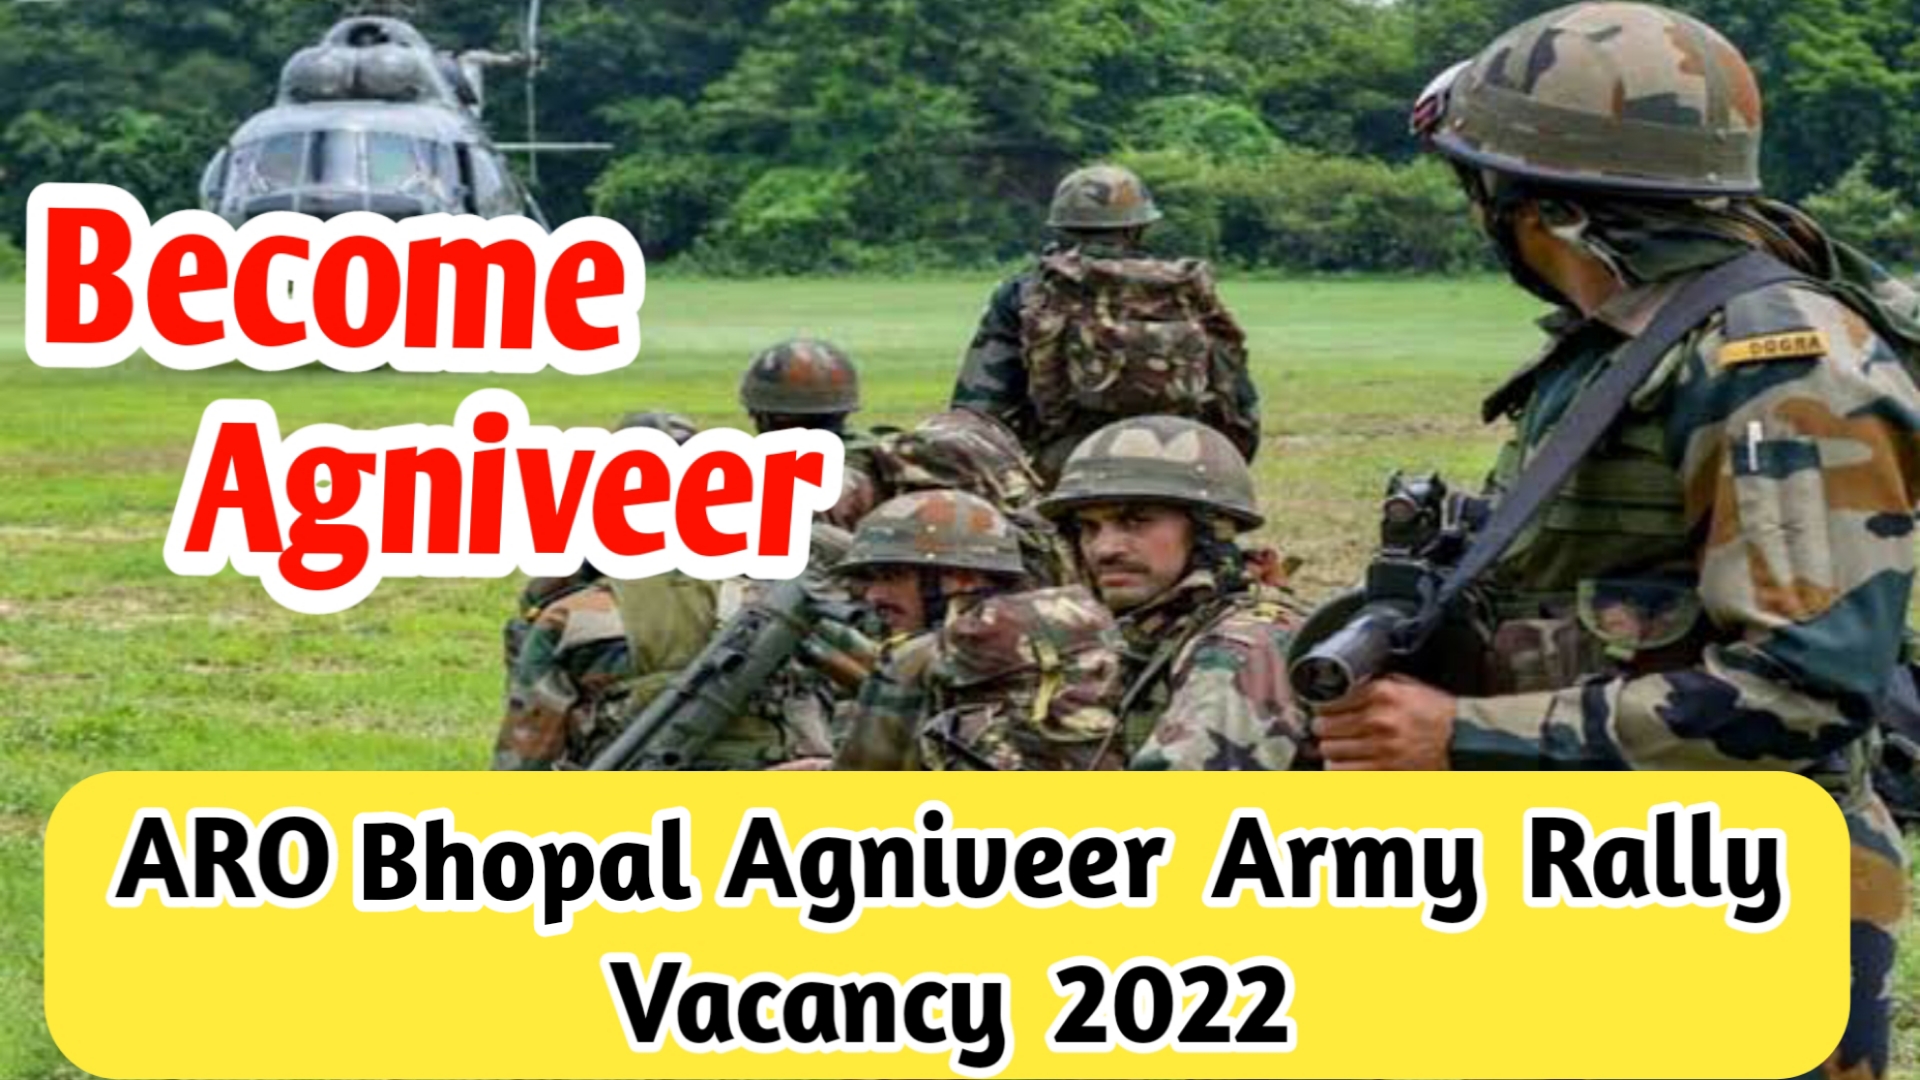 ARO Bhopal Agniveer Army Rally Vacancy 2022